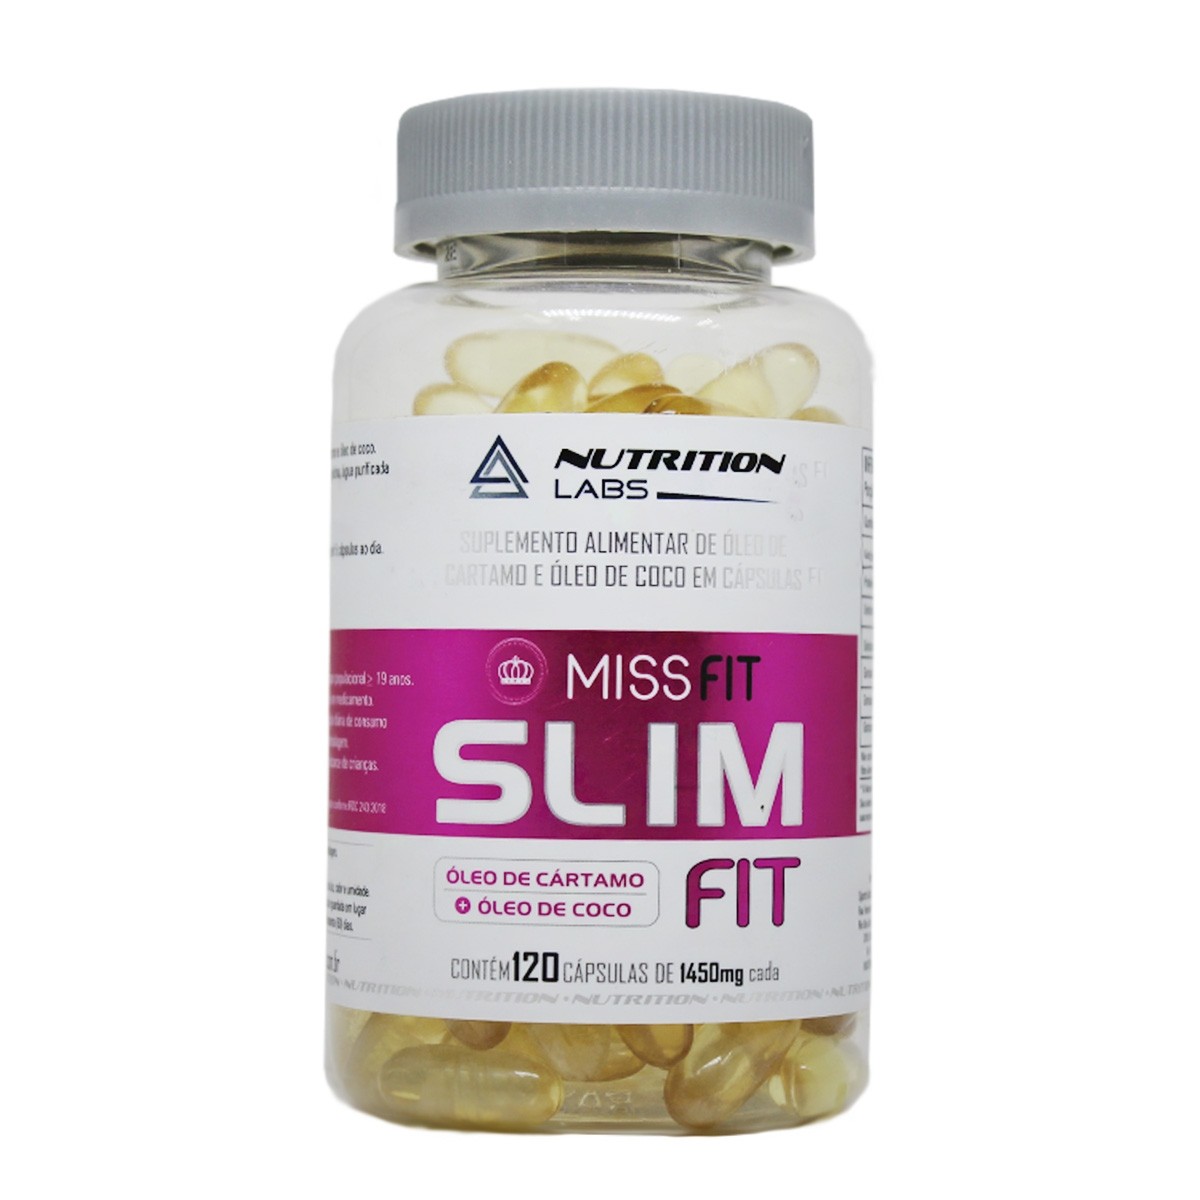 https://www.drogariaminasbrasil.com.br/media/product/dd5/missfit-slim-fit-com-120-capsulas-nutrition-labs-549.jpg